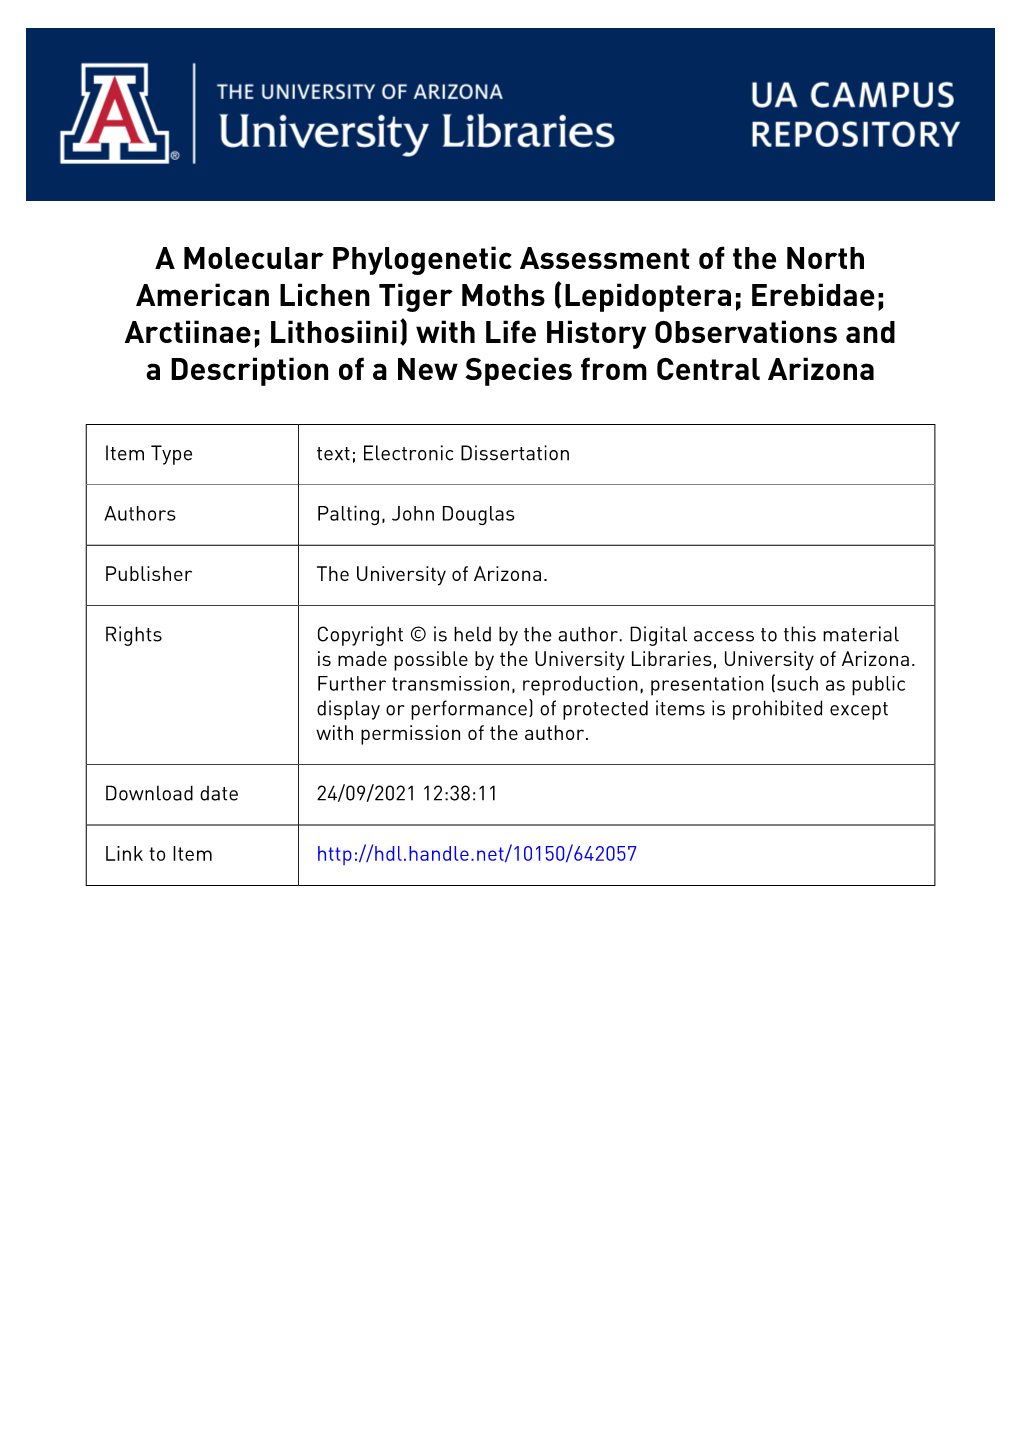 A Molecular Phylogenetic Assessment of North America Lichen Moths (Lepidoptera; Erebidae: Arctiinae; Lithosiini) with Life Histo